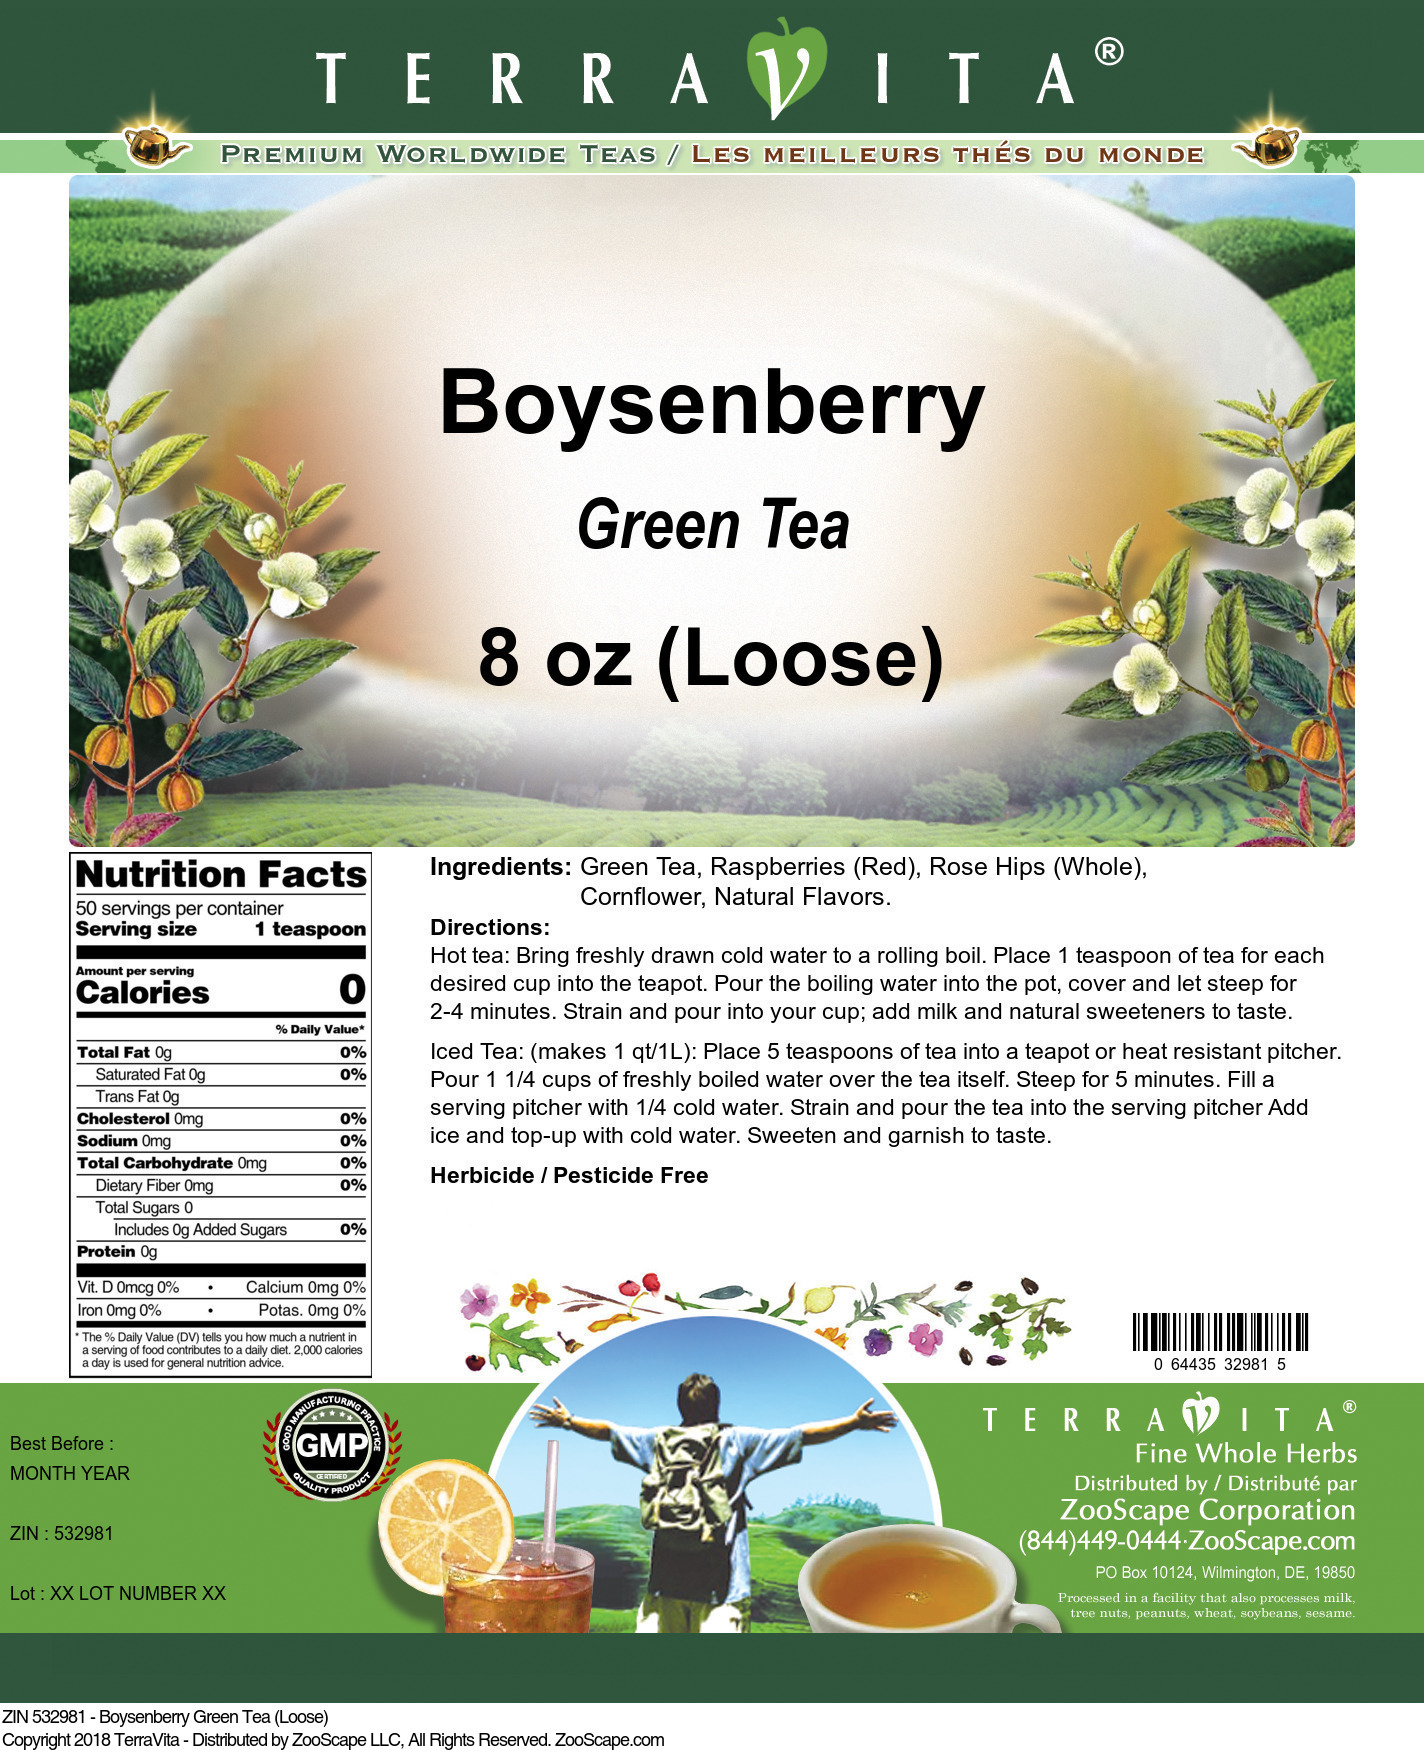 Boysenberry Green Tea (Loose) - Label